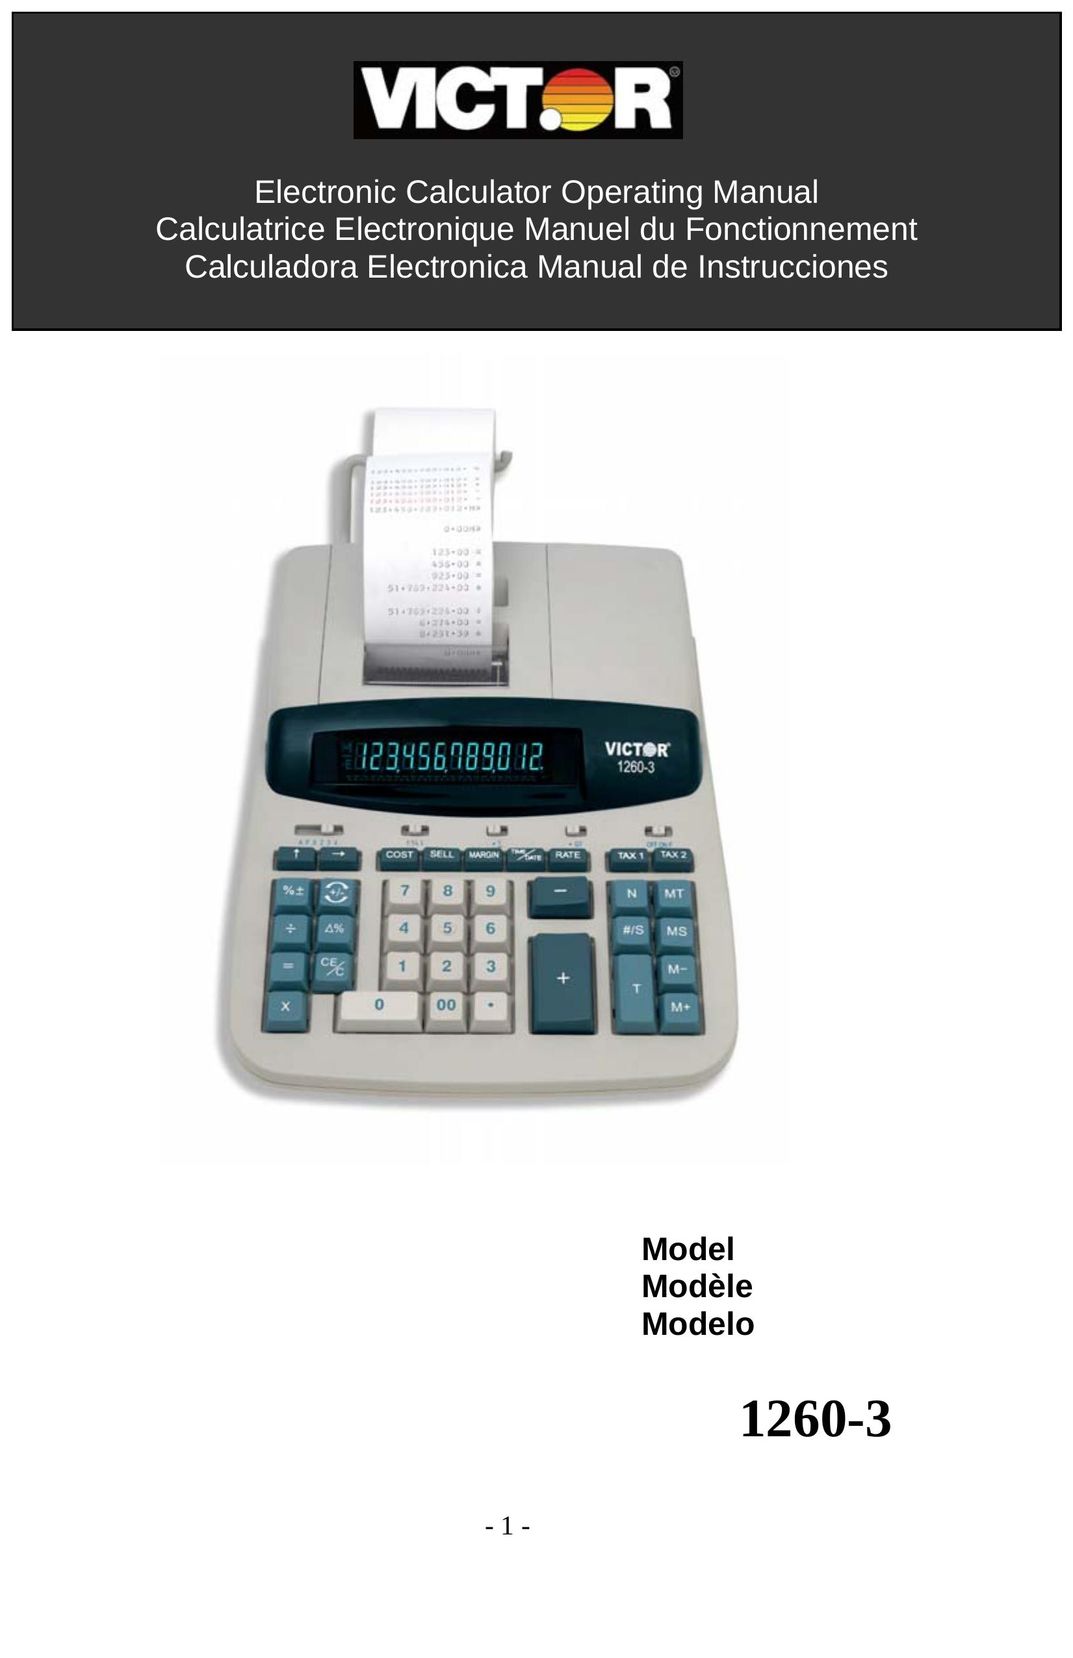 Victor Enterprise 1260-3 Calculator User Manual